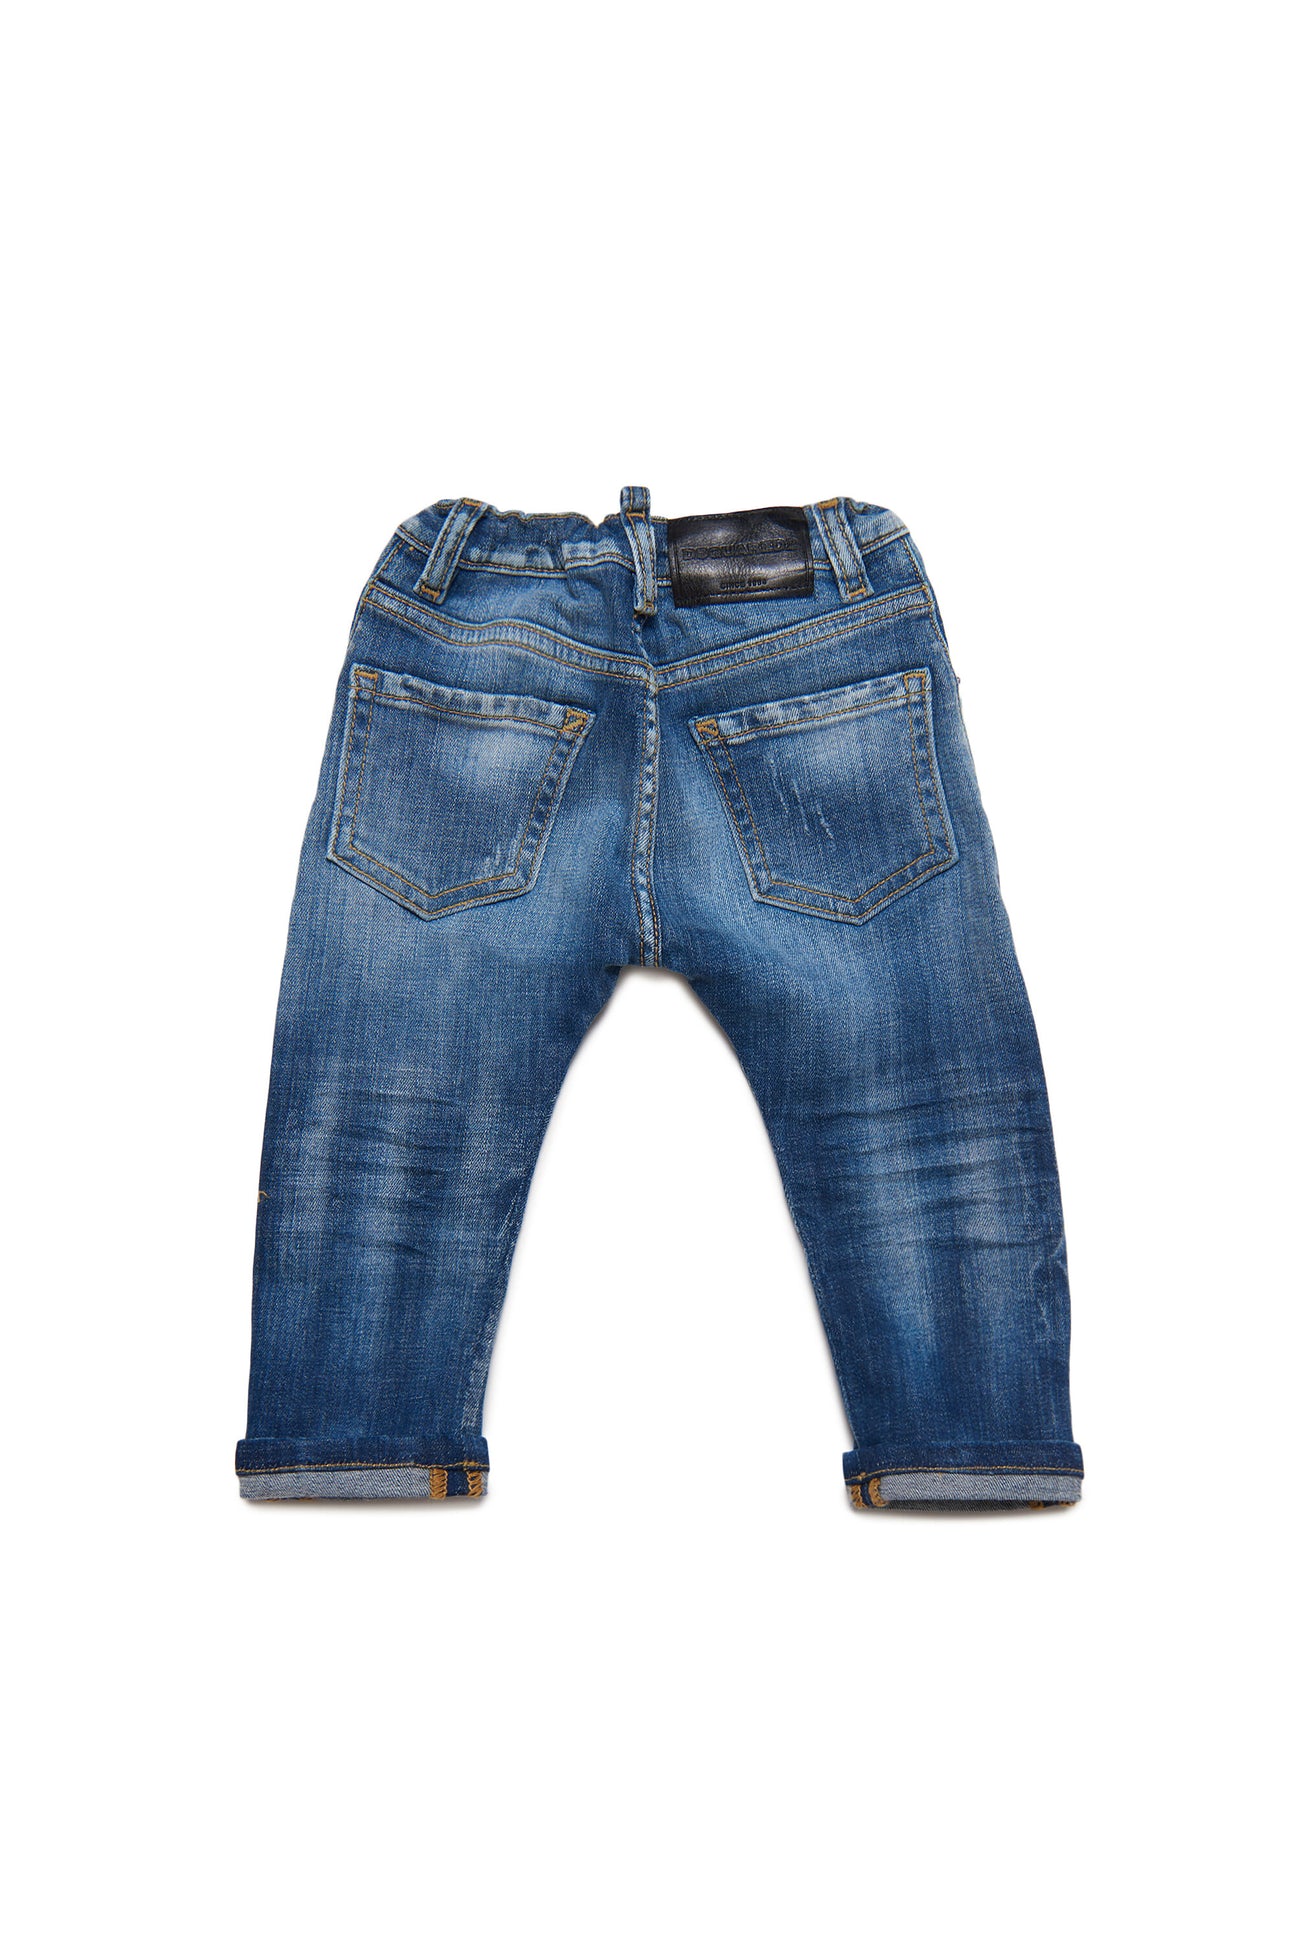 Medium blue jeans shaded with abrasions Medium blue jeans shaded with abrasions